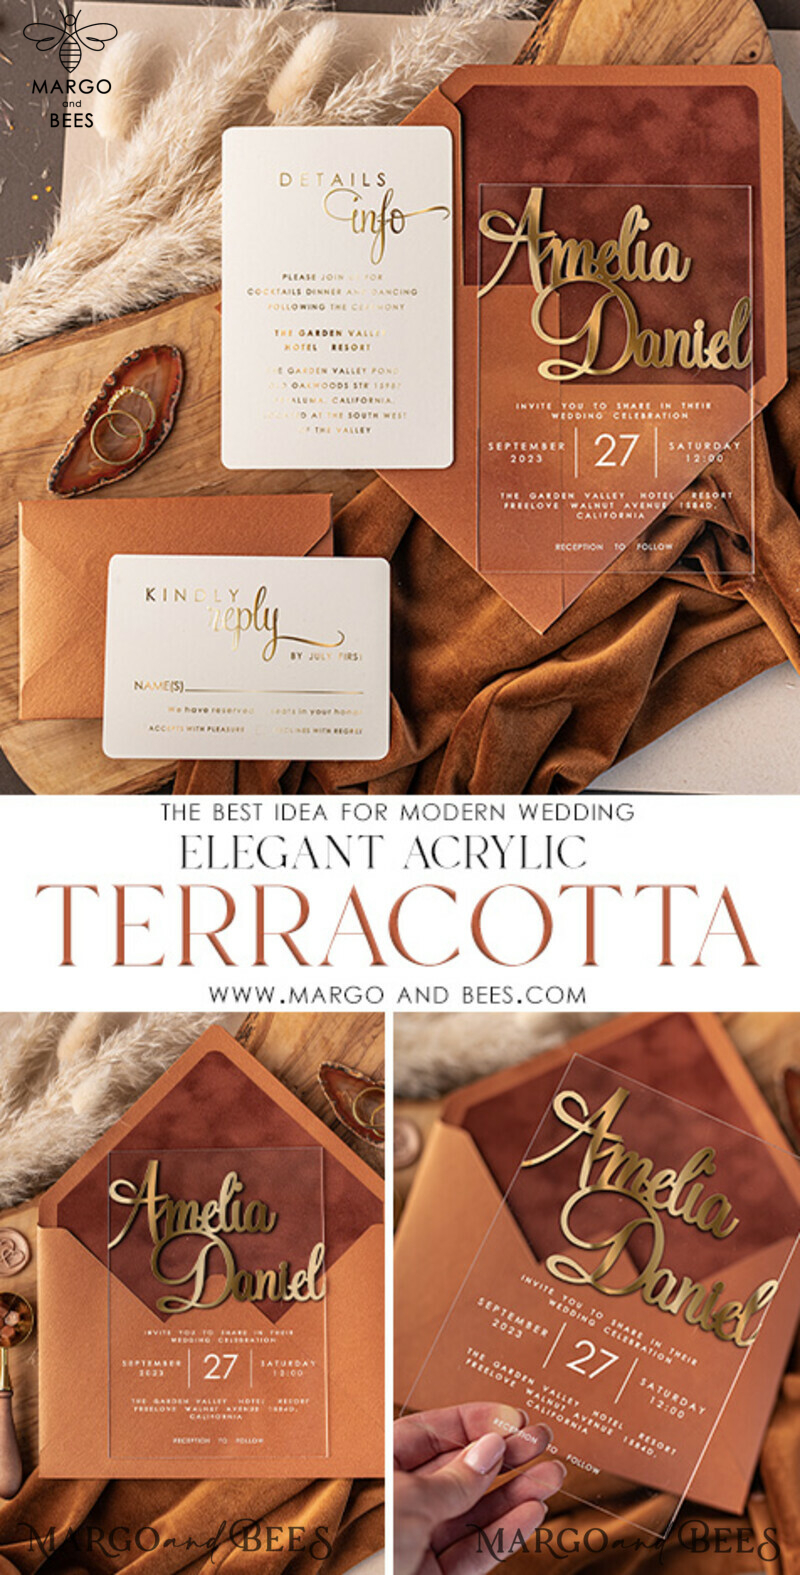 Exquisite Handcrafted Wedding Invitations: Bespoke Terracotta, Glamour Acrylic, Golden Velvet, Luxury Cards-3